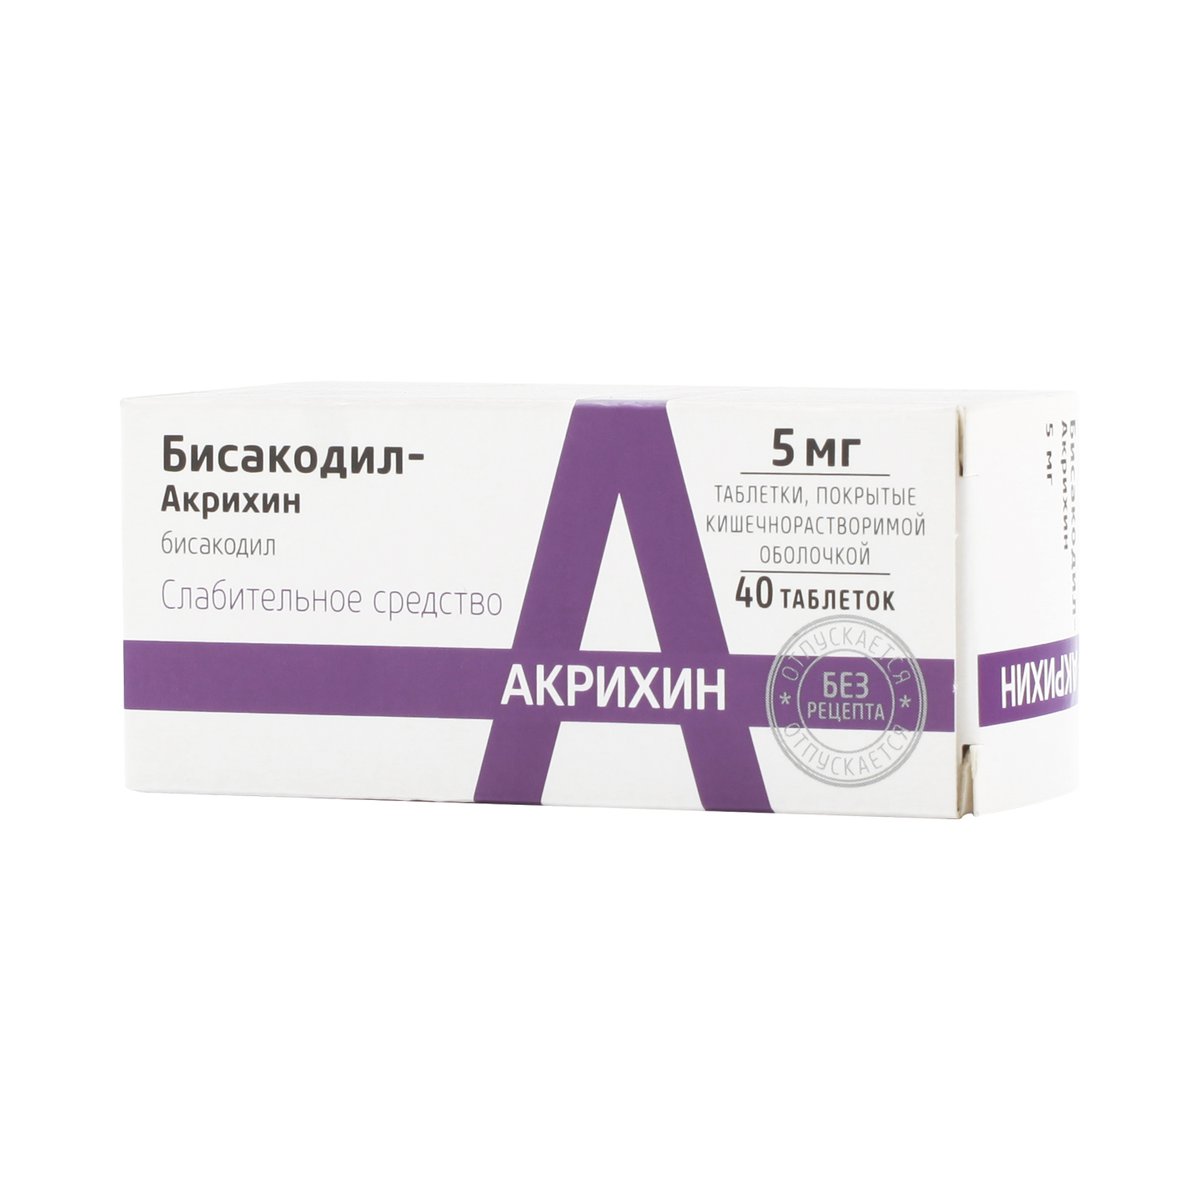 Бисакодил-акри (таблетки, 40 шт, 5 мг) - цена,  онлайн  .